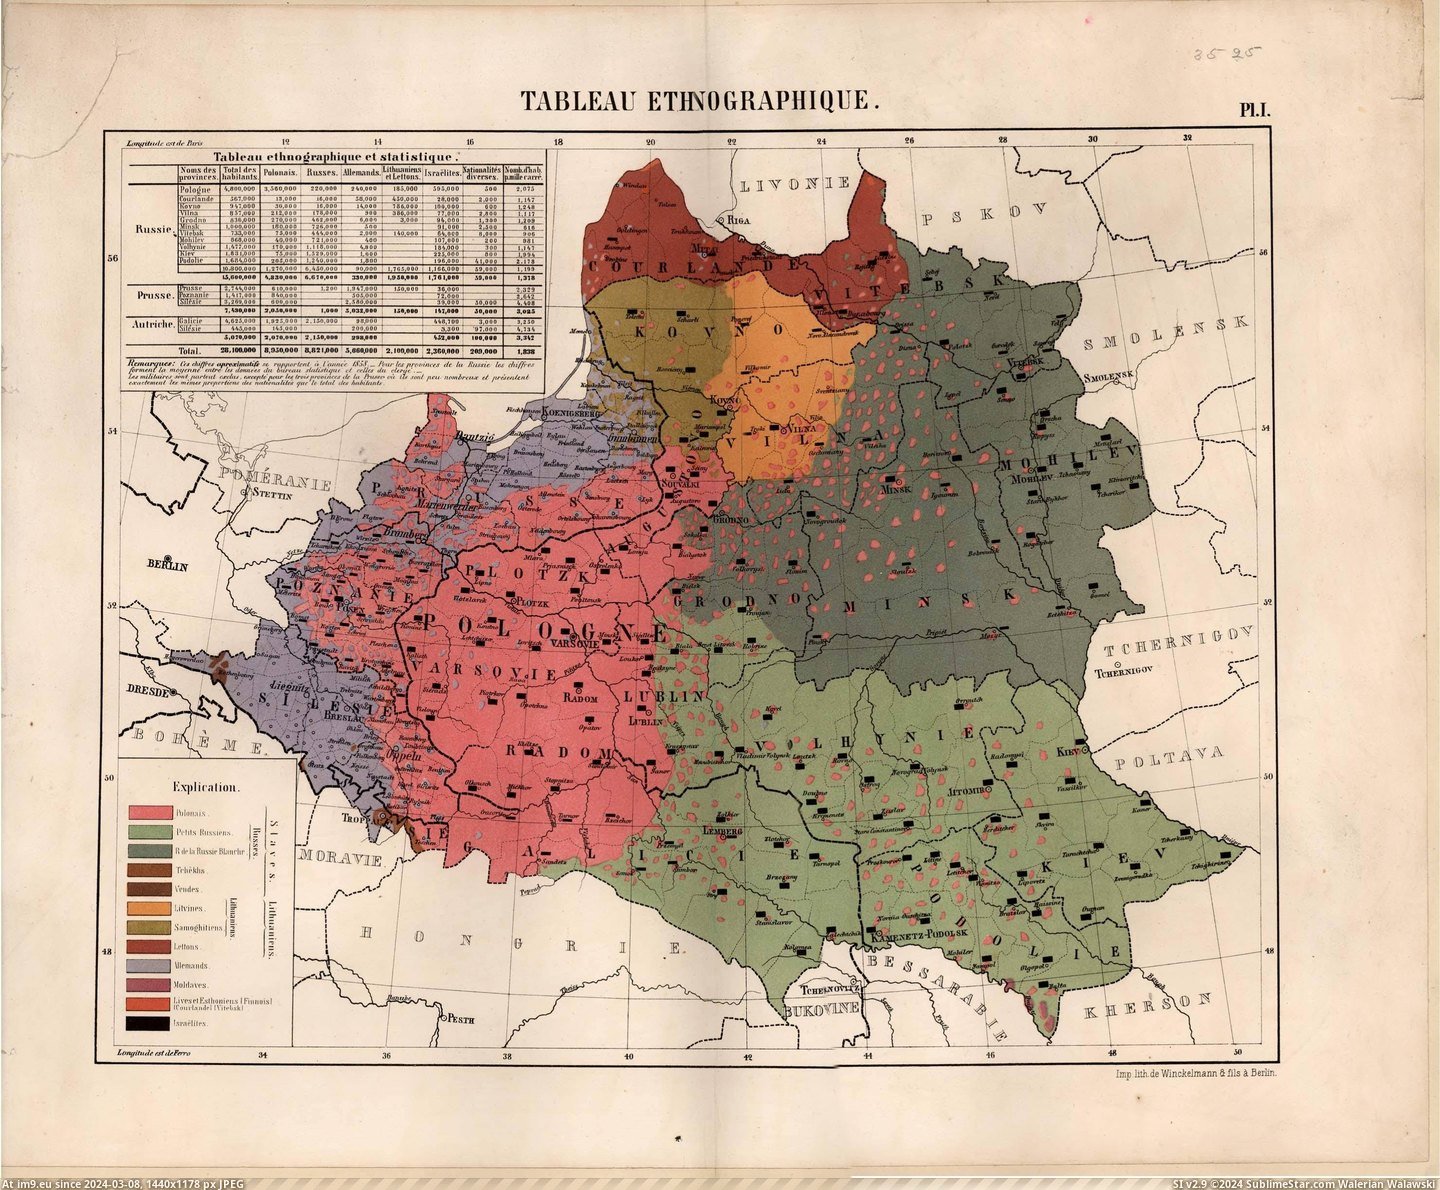 #Map #Poland #Partitioned #Statistics #Ethnographic [Mapporn] Ethnographic Map and Statistics of Partitioned Poland, 1858 [2959×2432] Pic. (Obraz z album My r/MAPS favs))